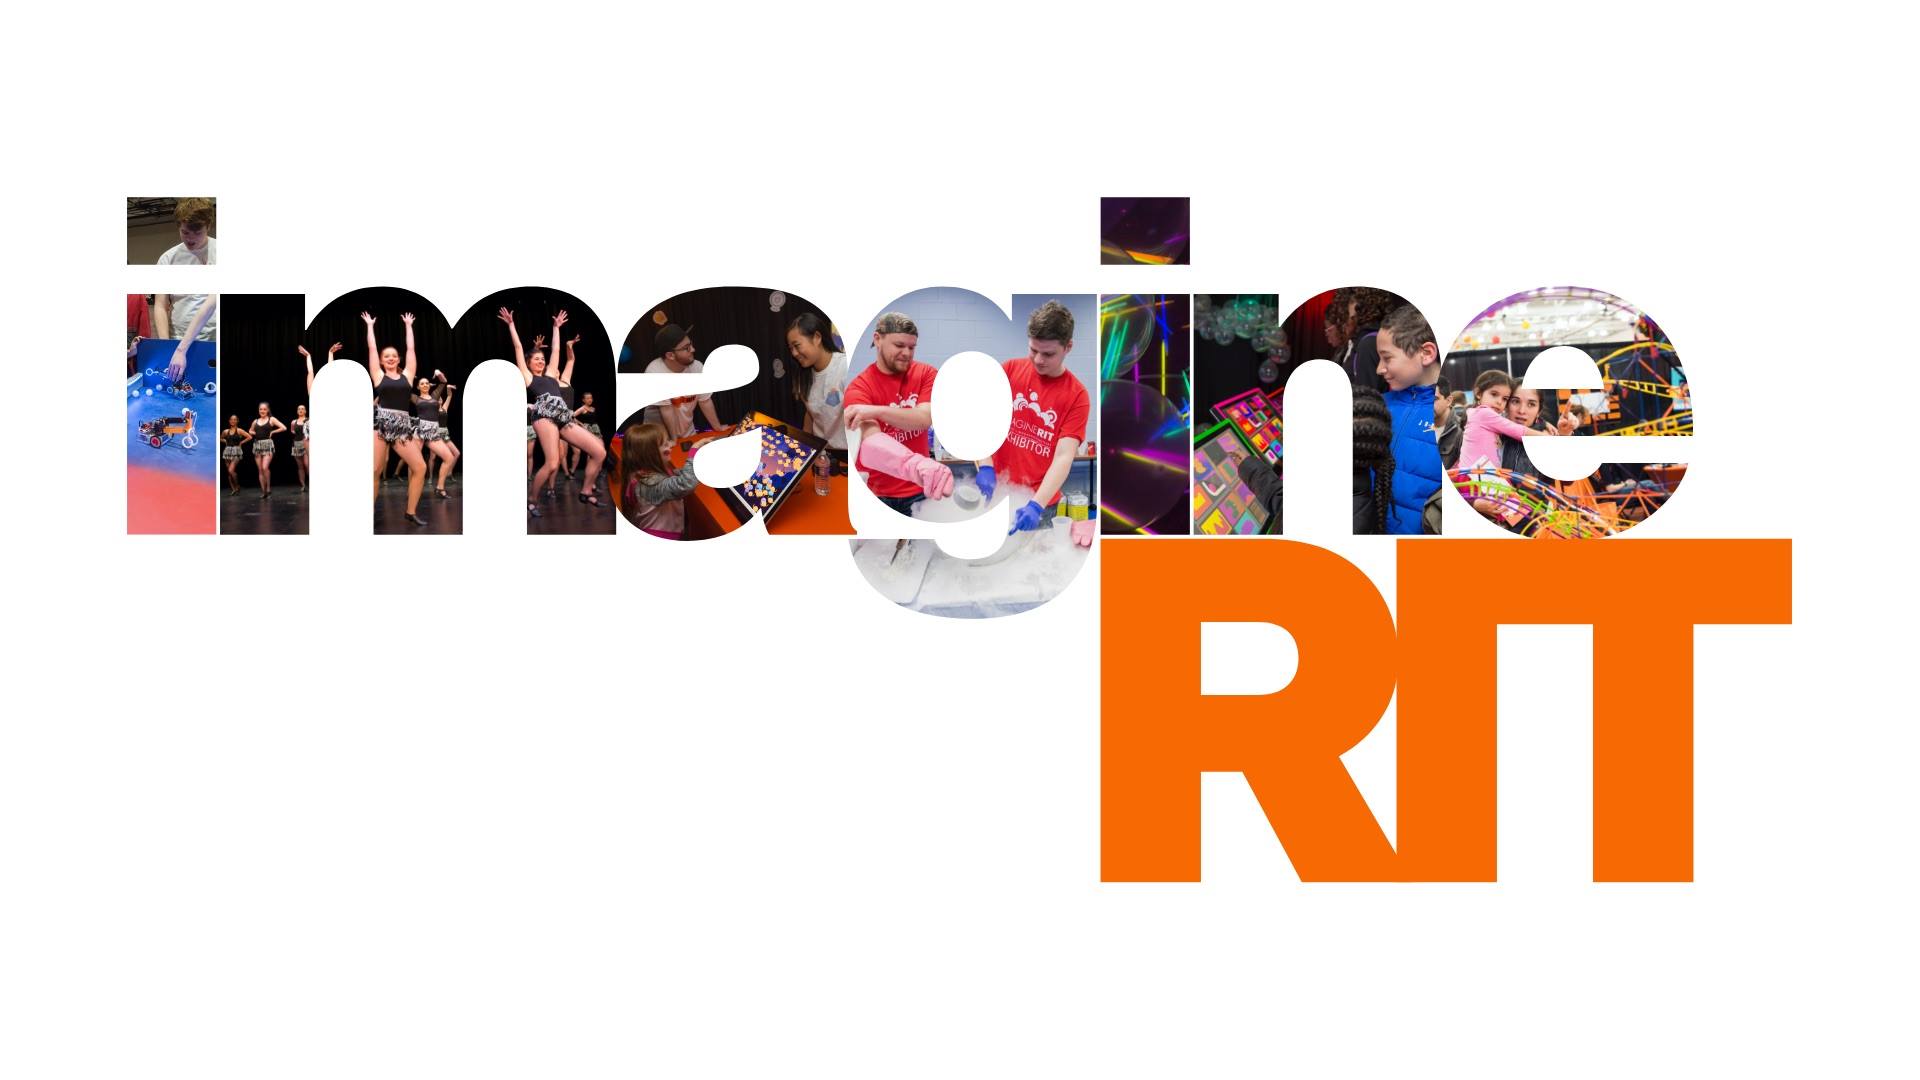 Imagine RIT logo